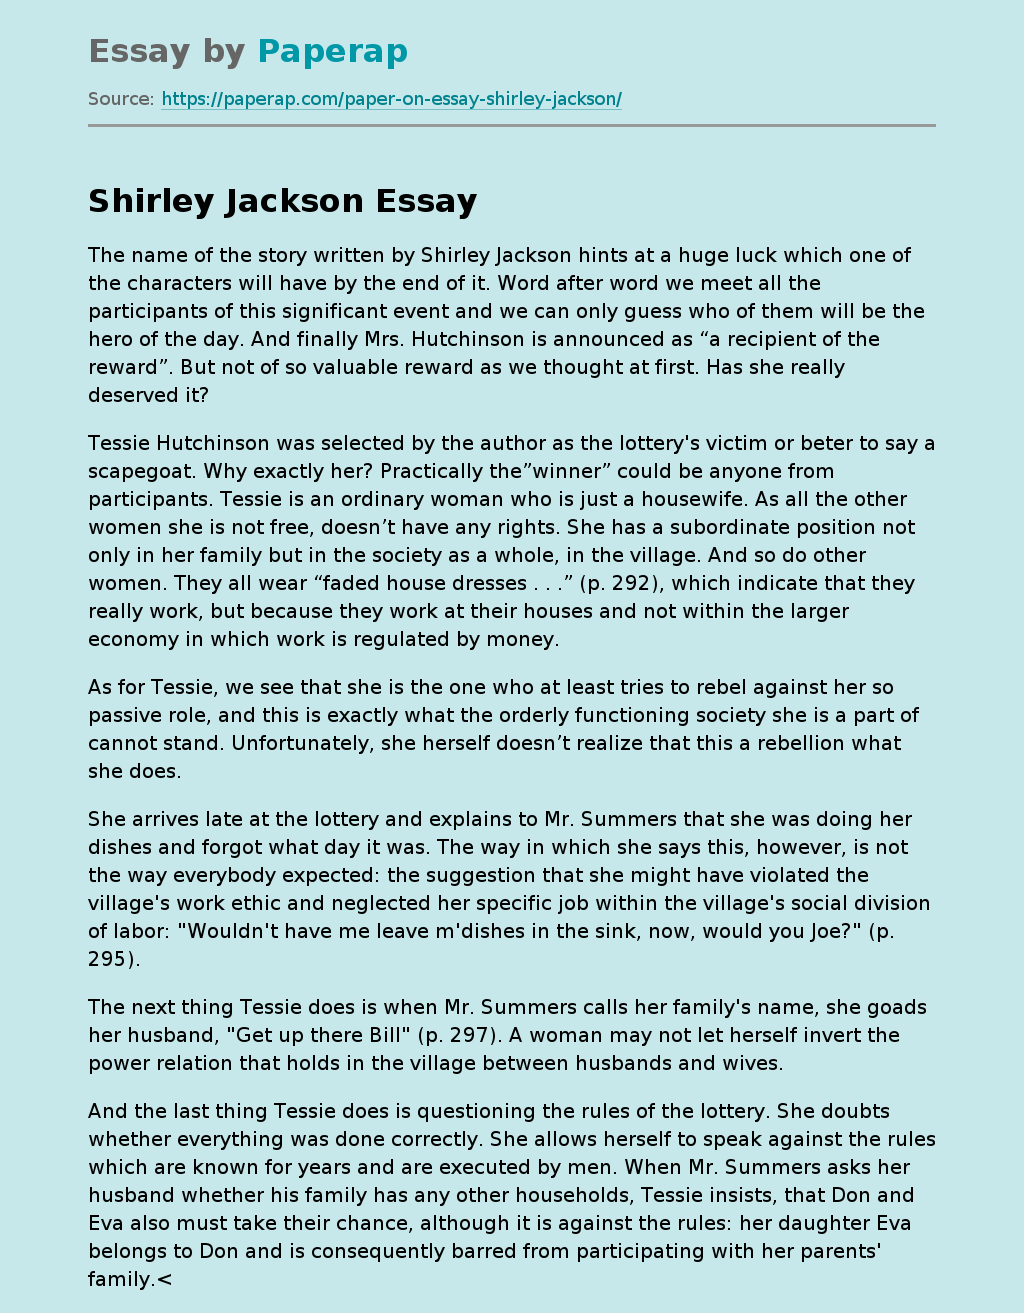 "The Lottery" Shirley Jackson